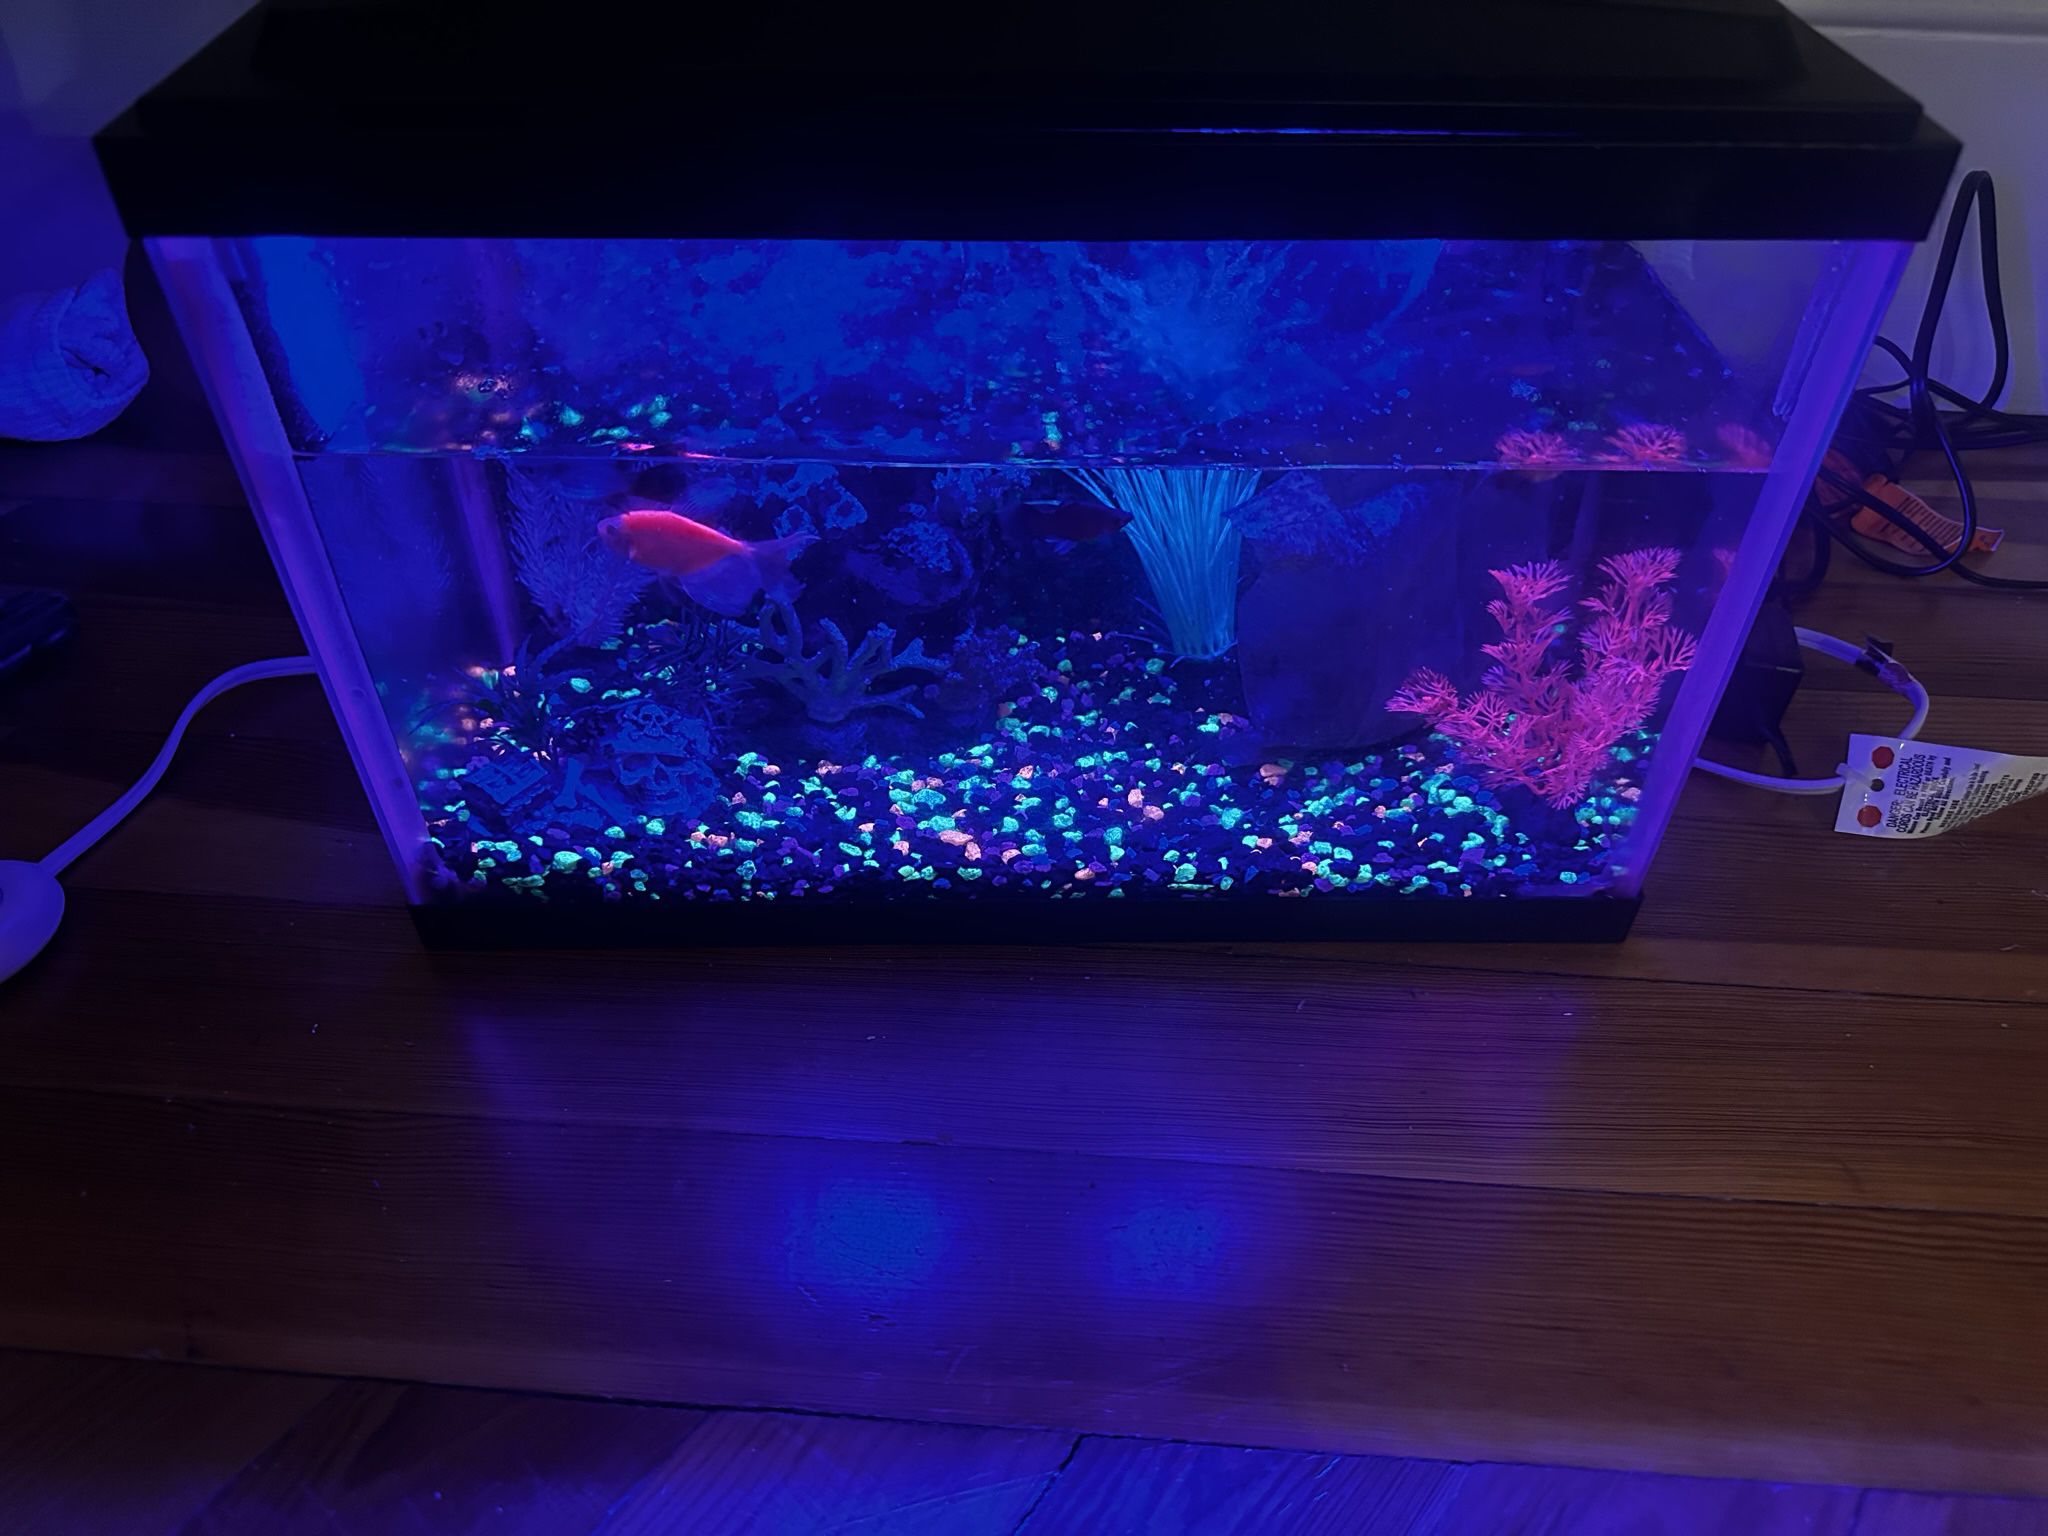 GloFish Tank 5 gallon for Sale in Malden, MA - OfferUp